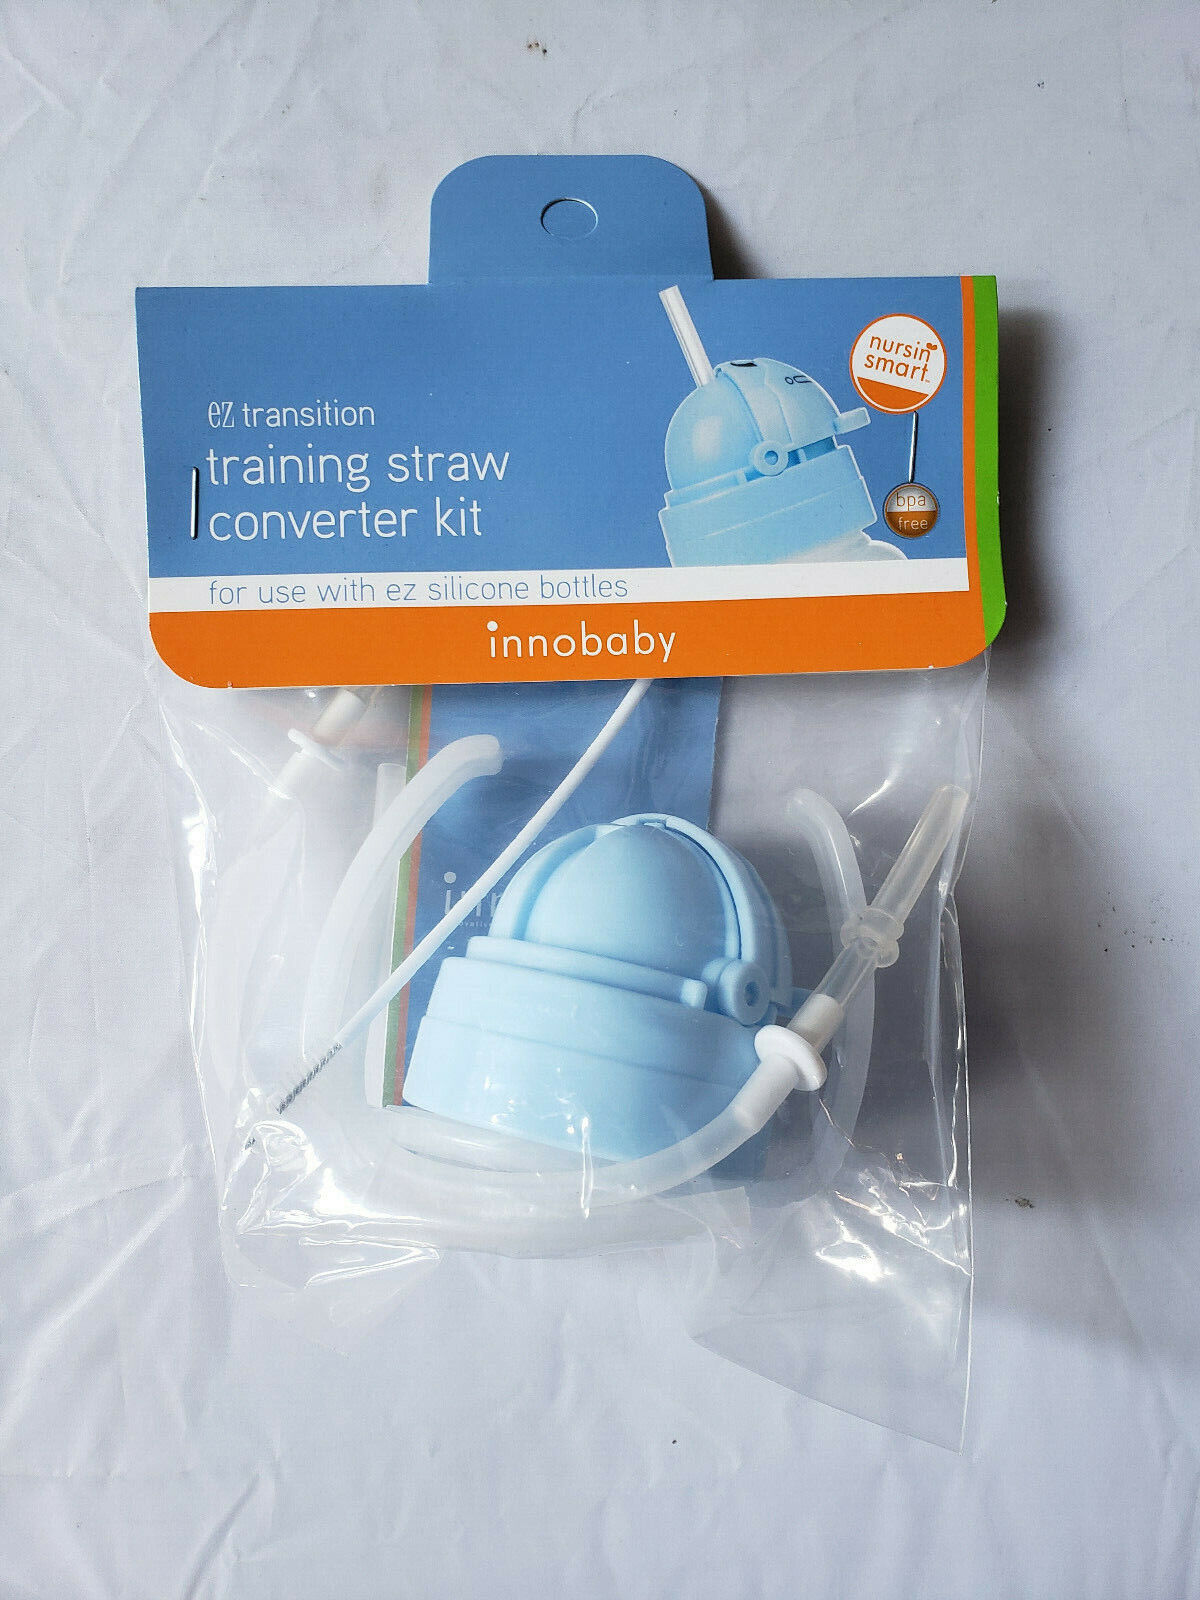 Innobaby Ez Transition Training Straw Converter Kit Nursin Smart Sealed